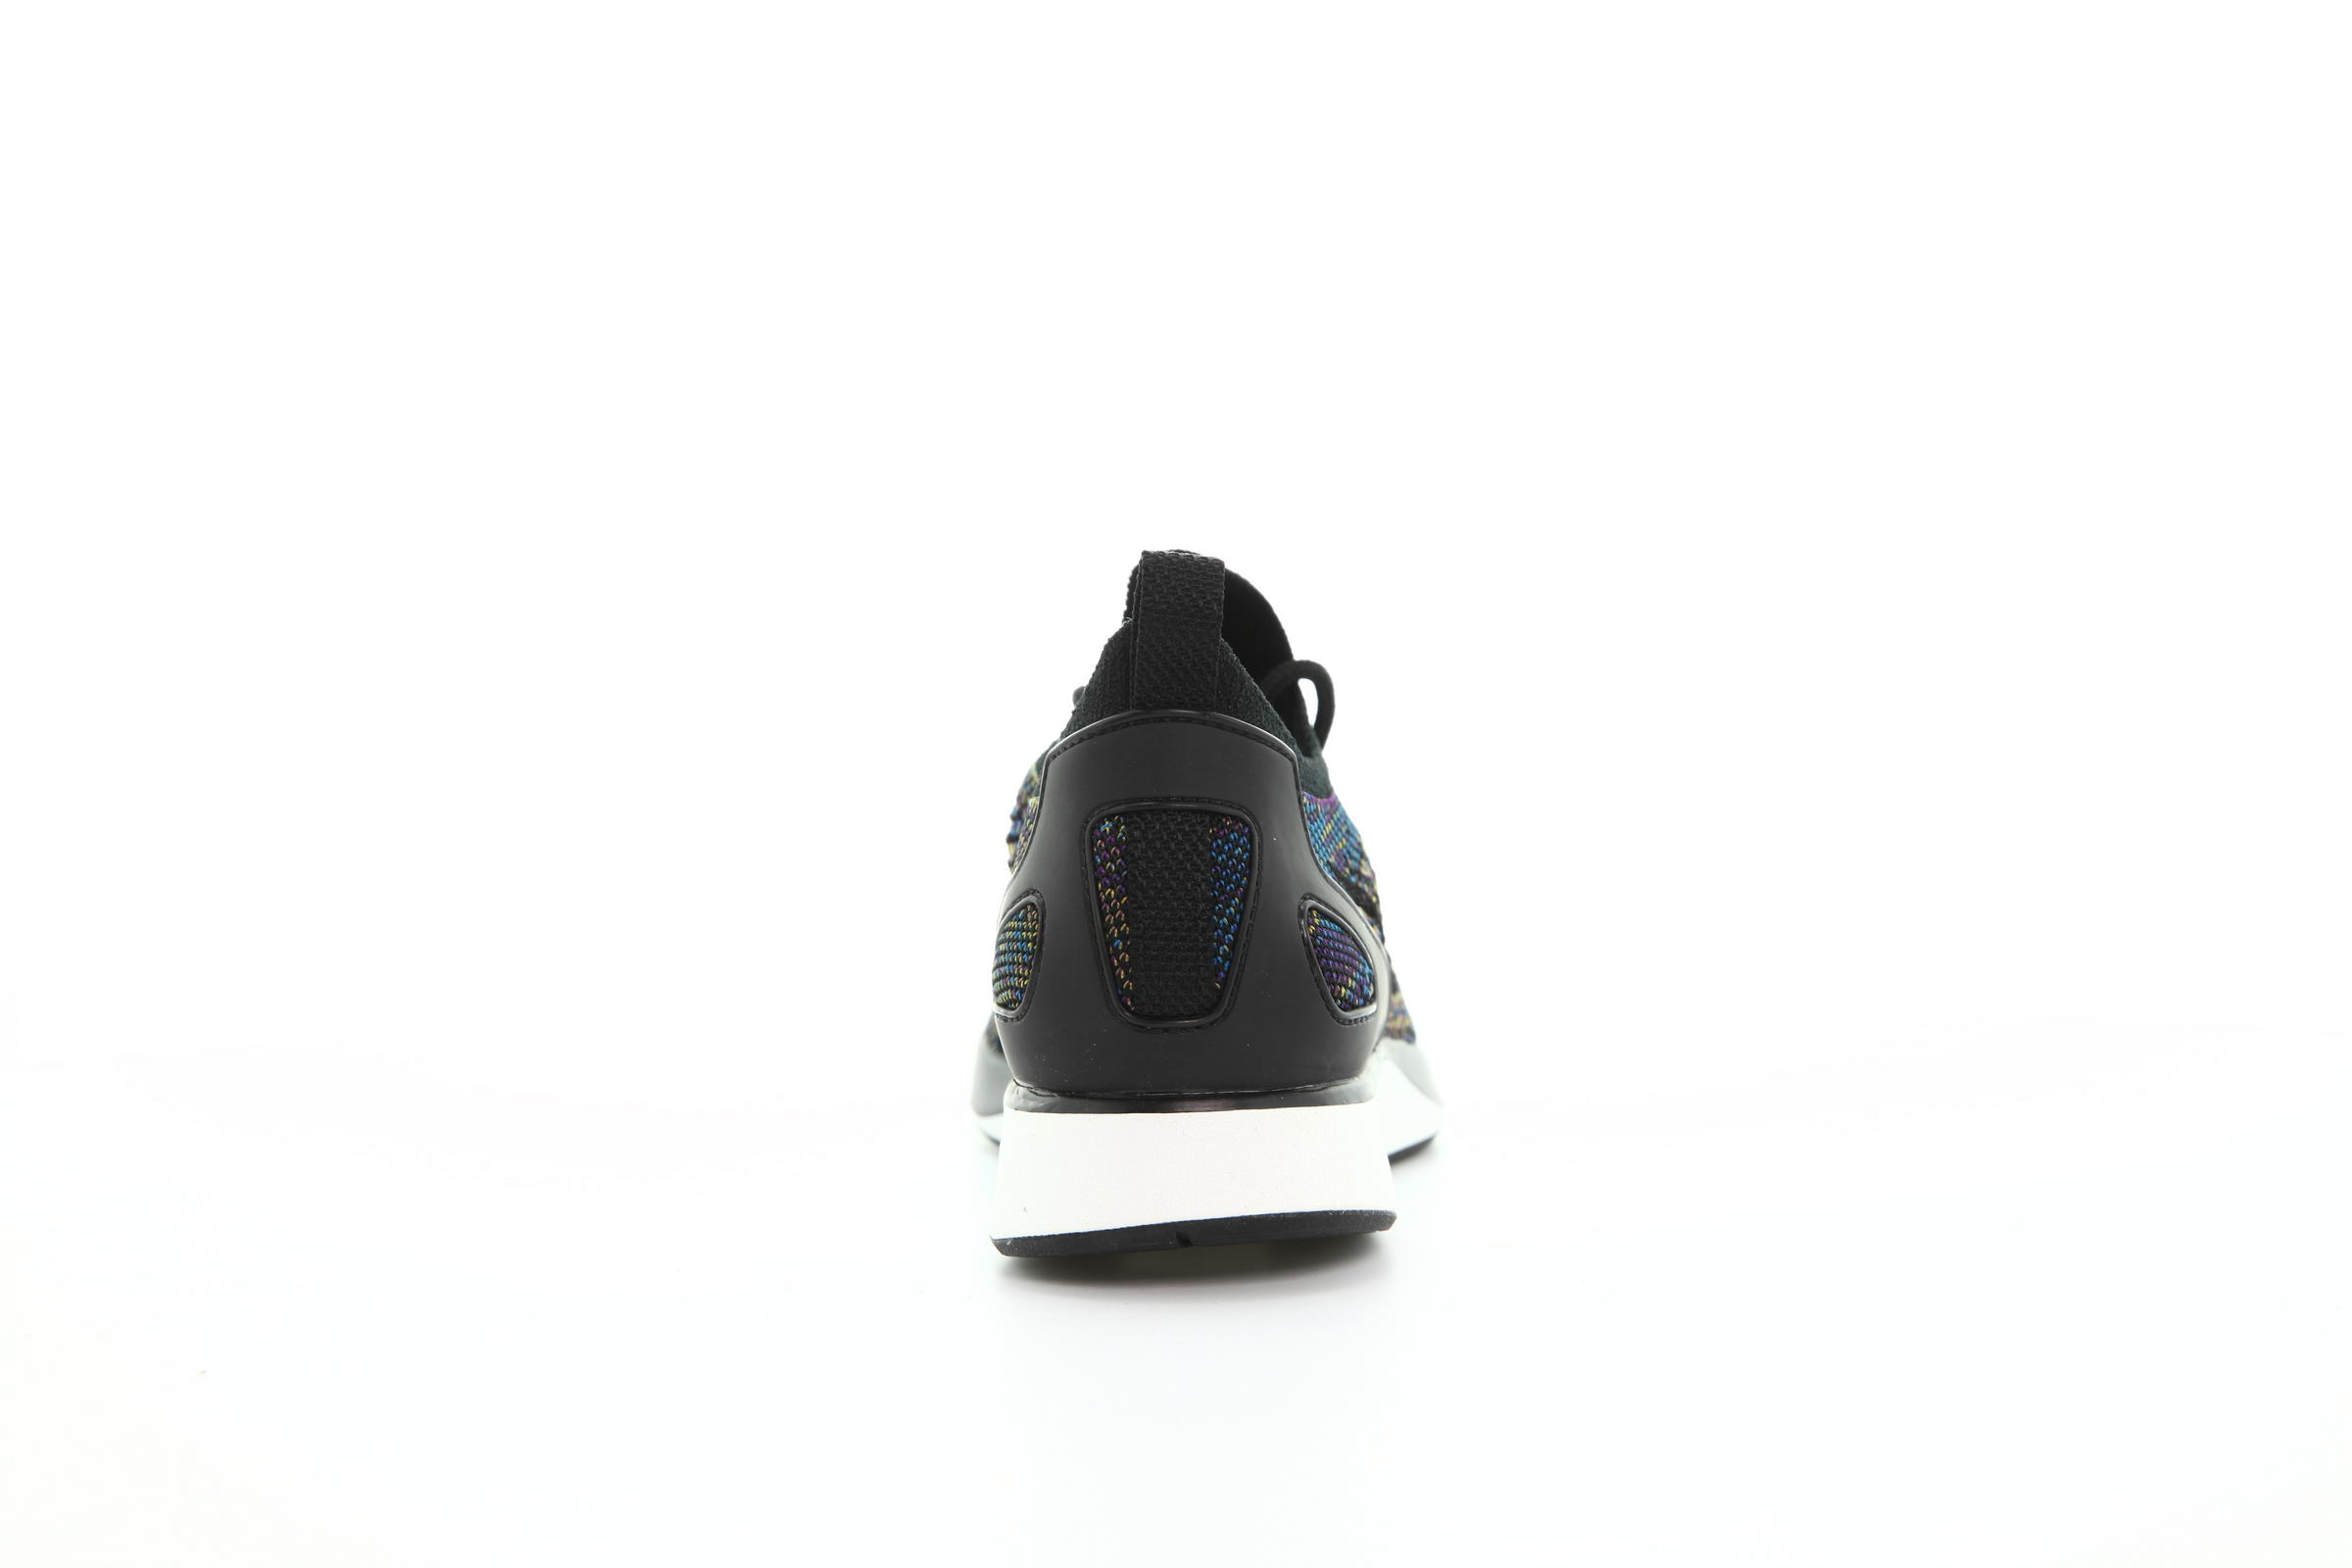 Nike WMNS Air Zoom Mariah Flyknit Racer "Black"